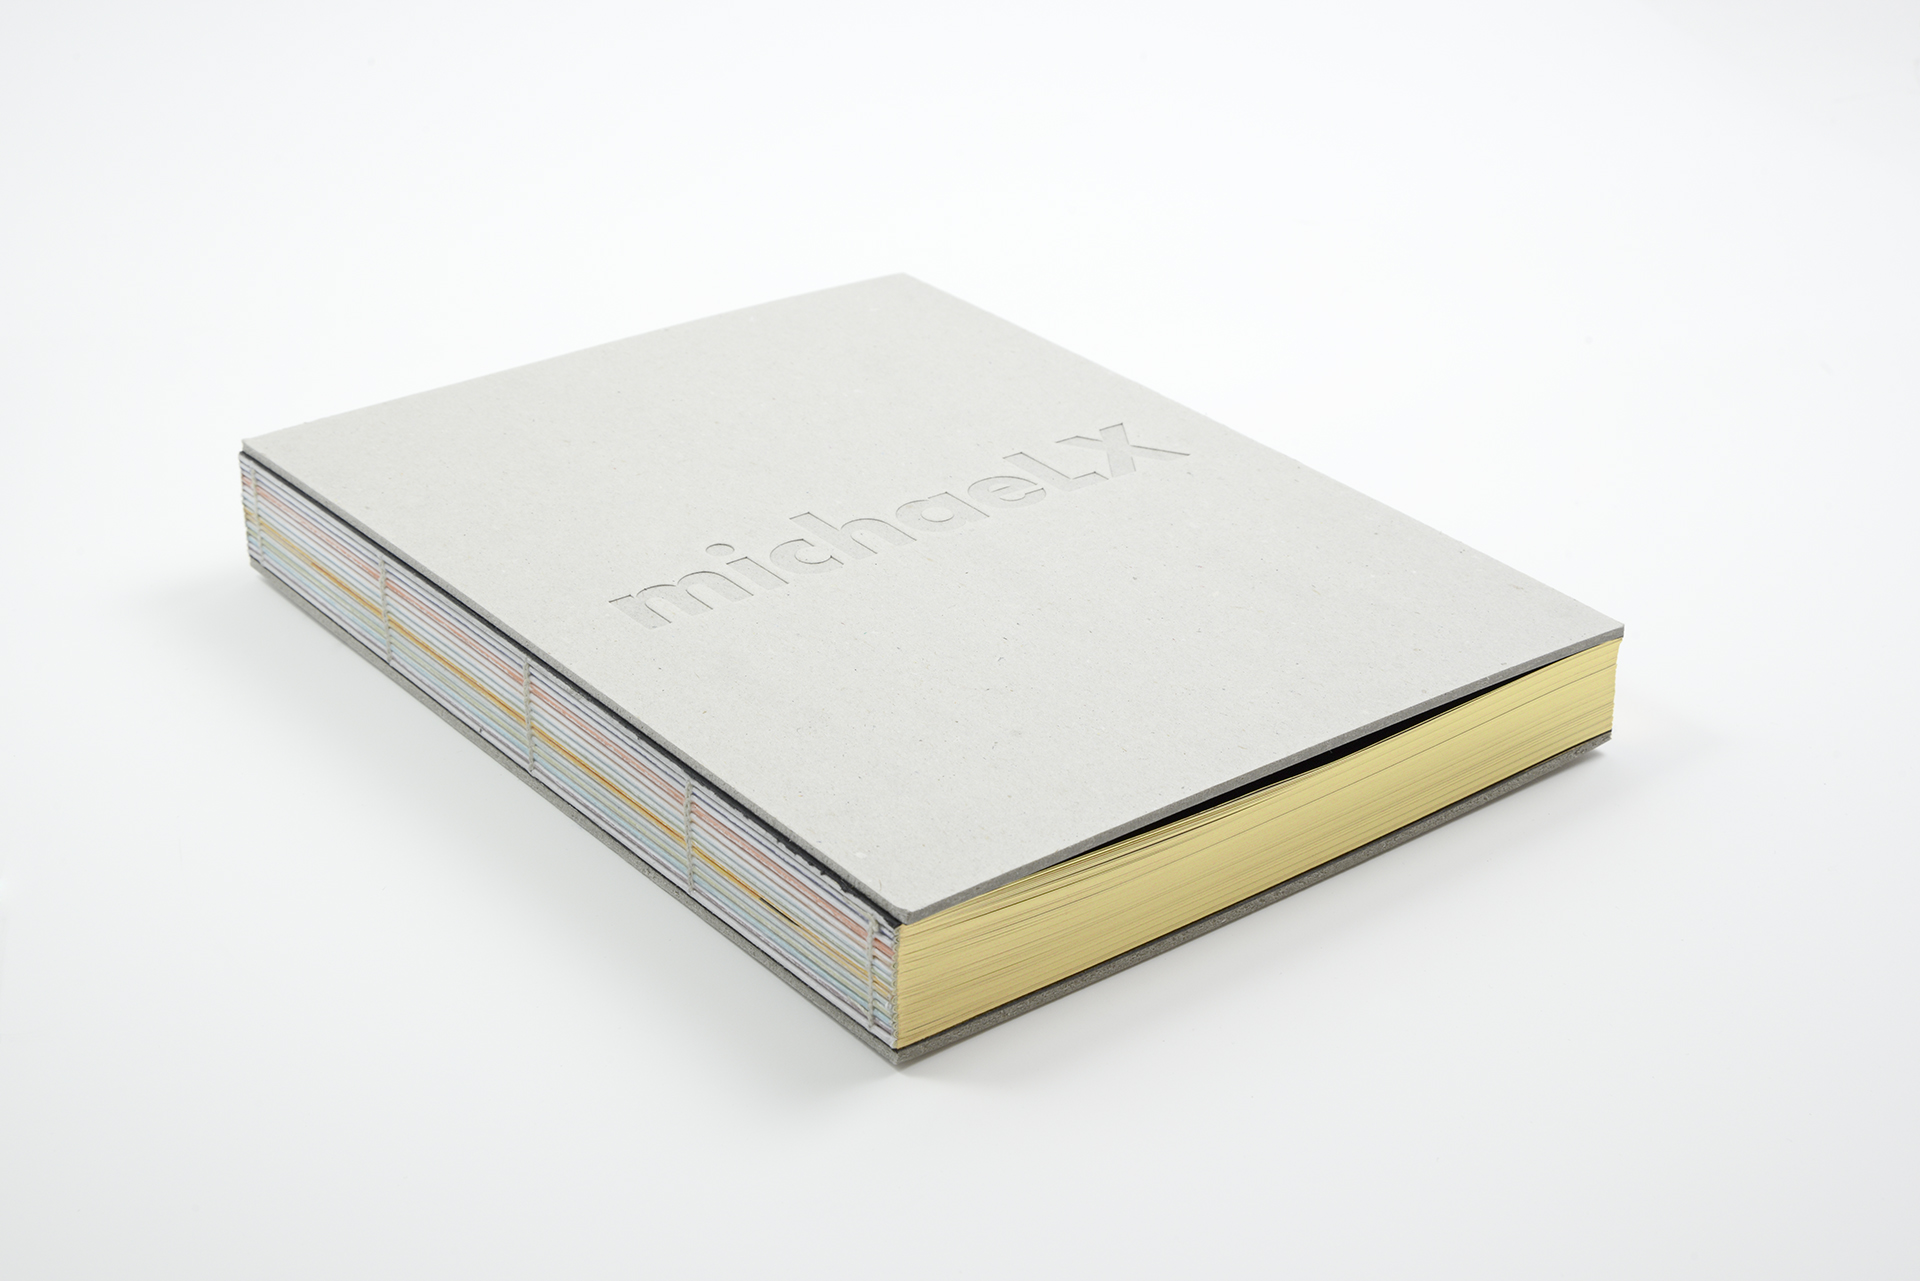 Buchprojekt (Editorial Design) - michaeLX